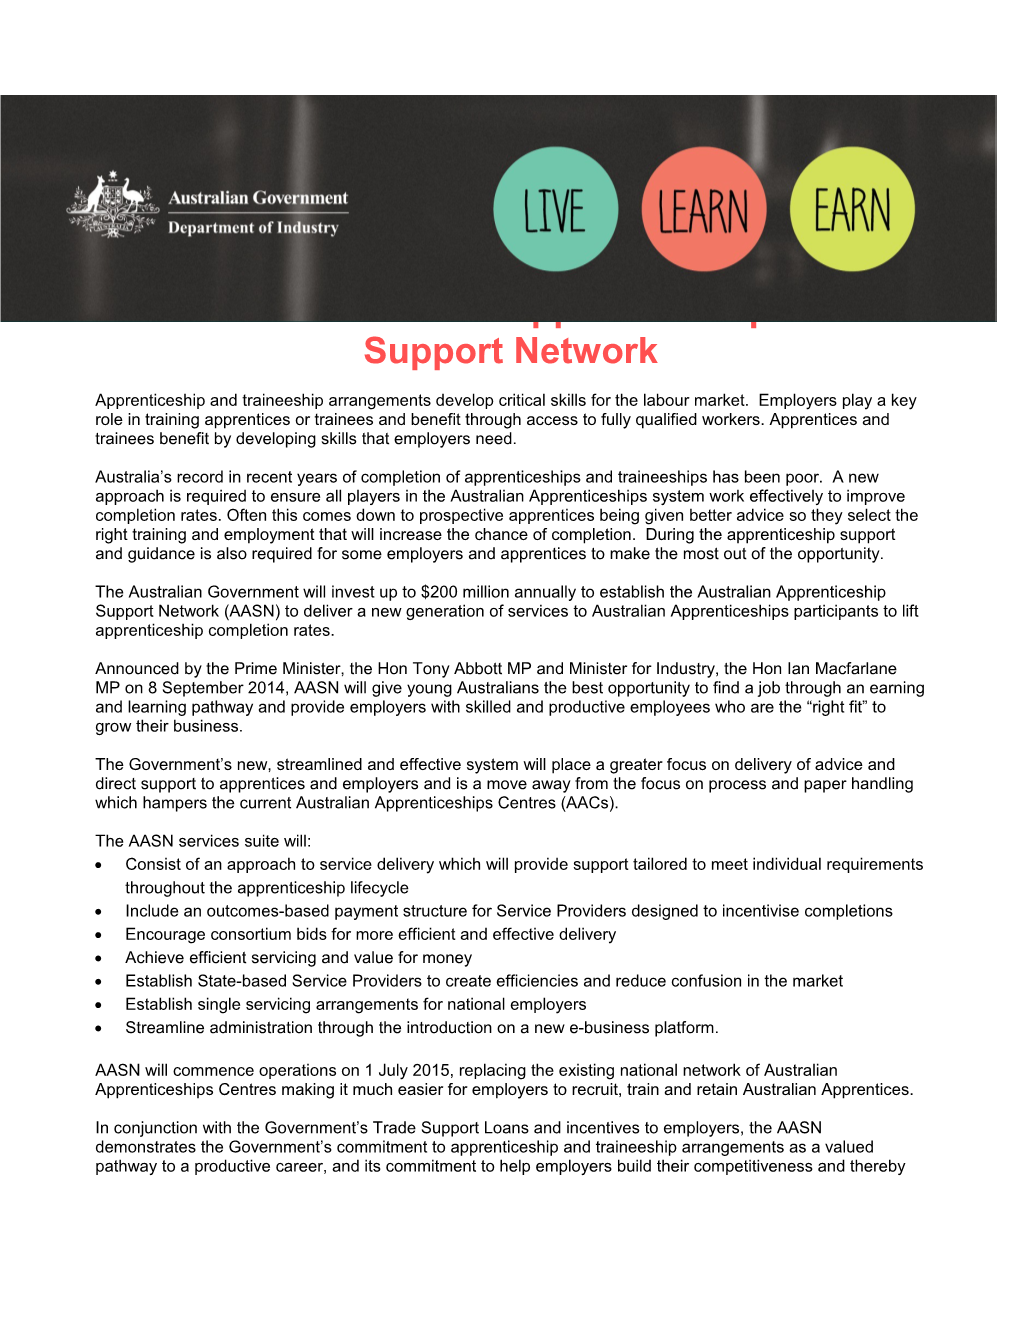 The Australian Apprenticeship Support Network